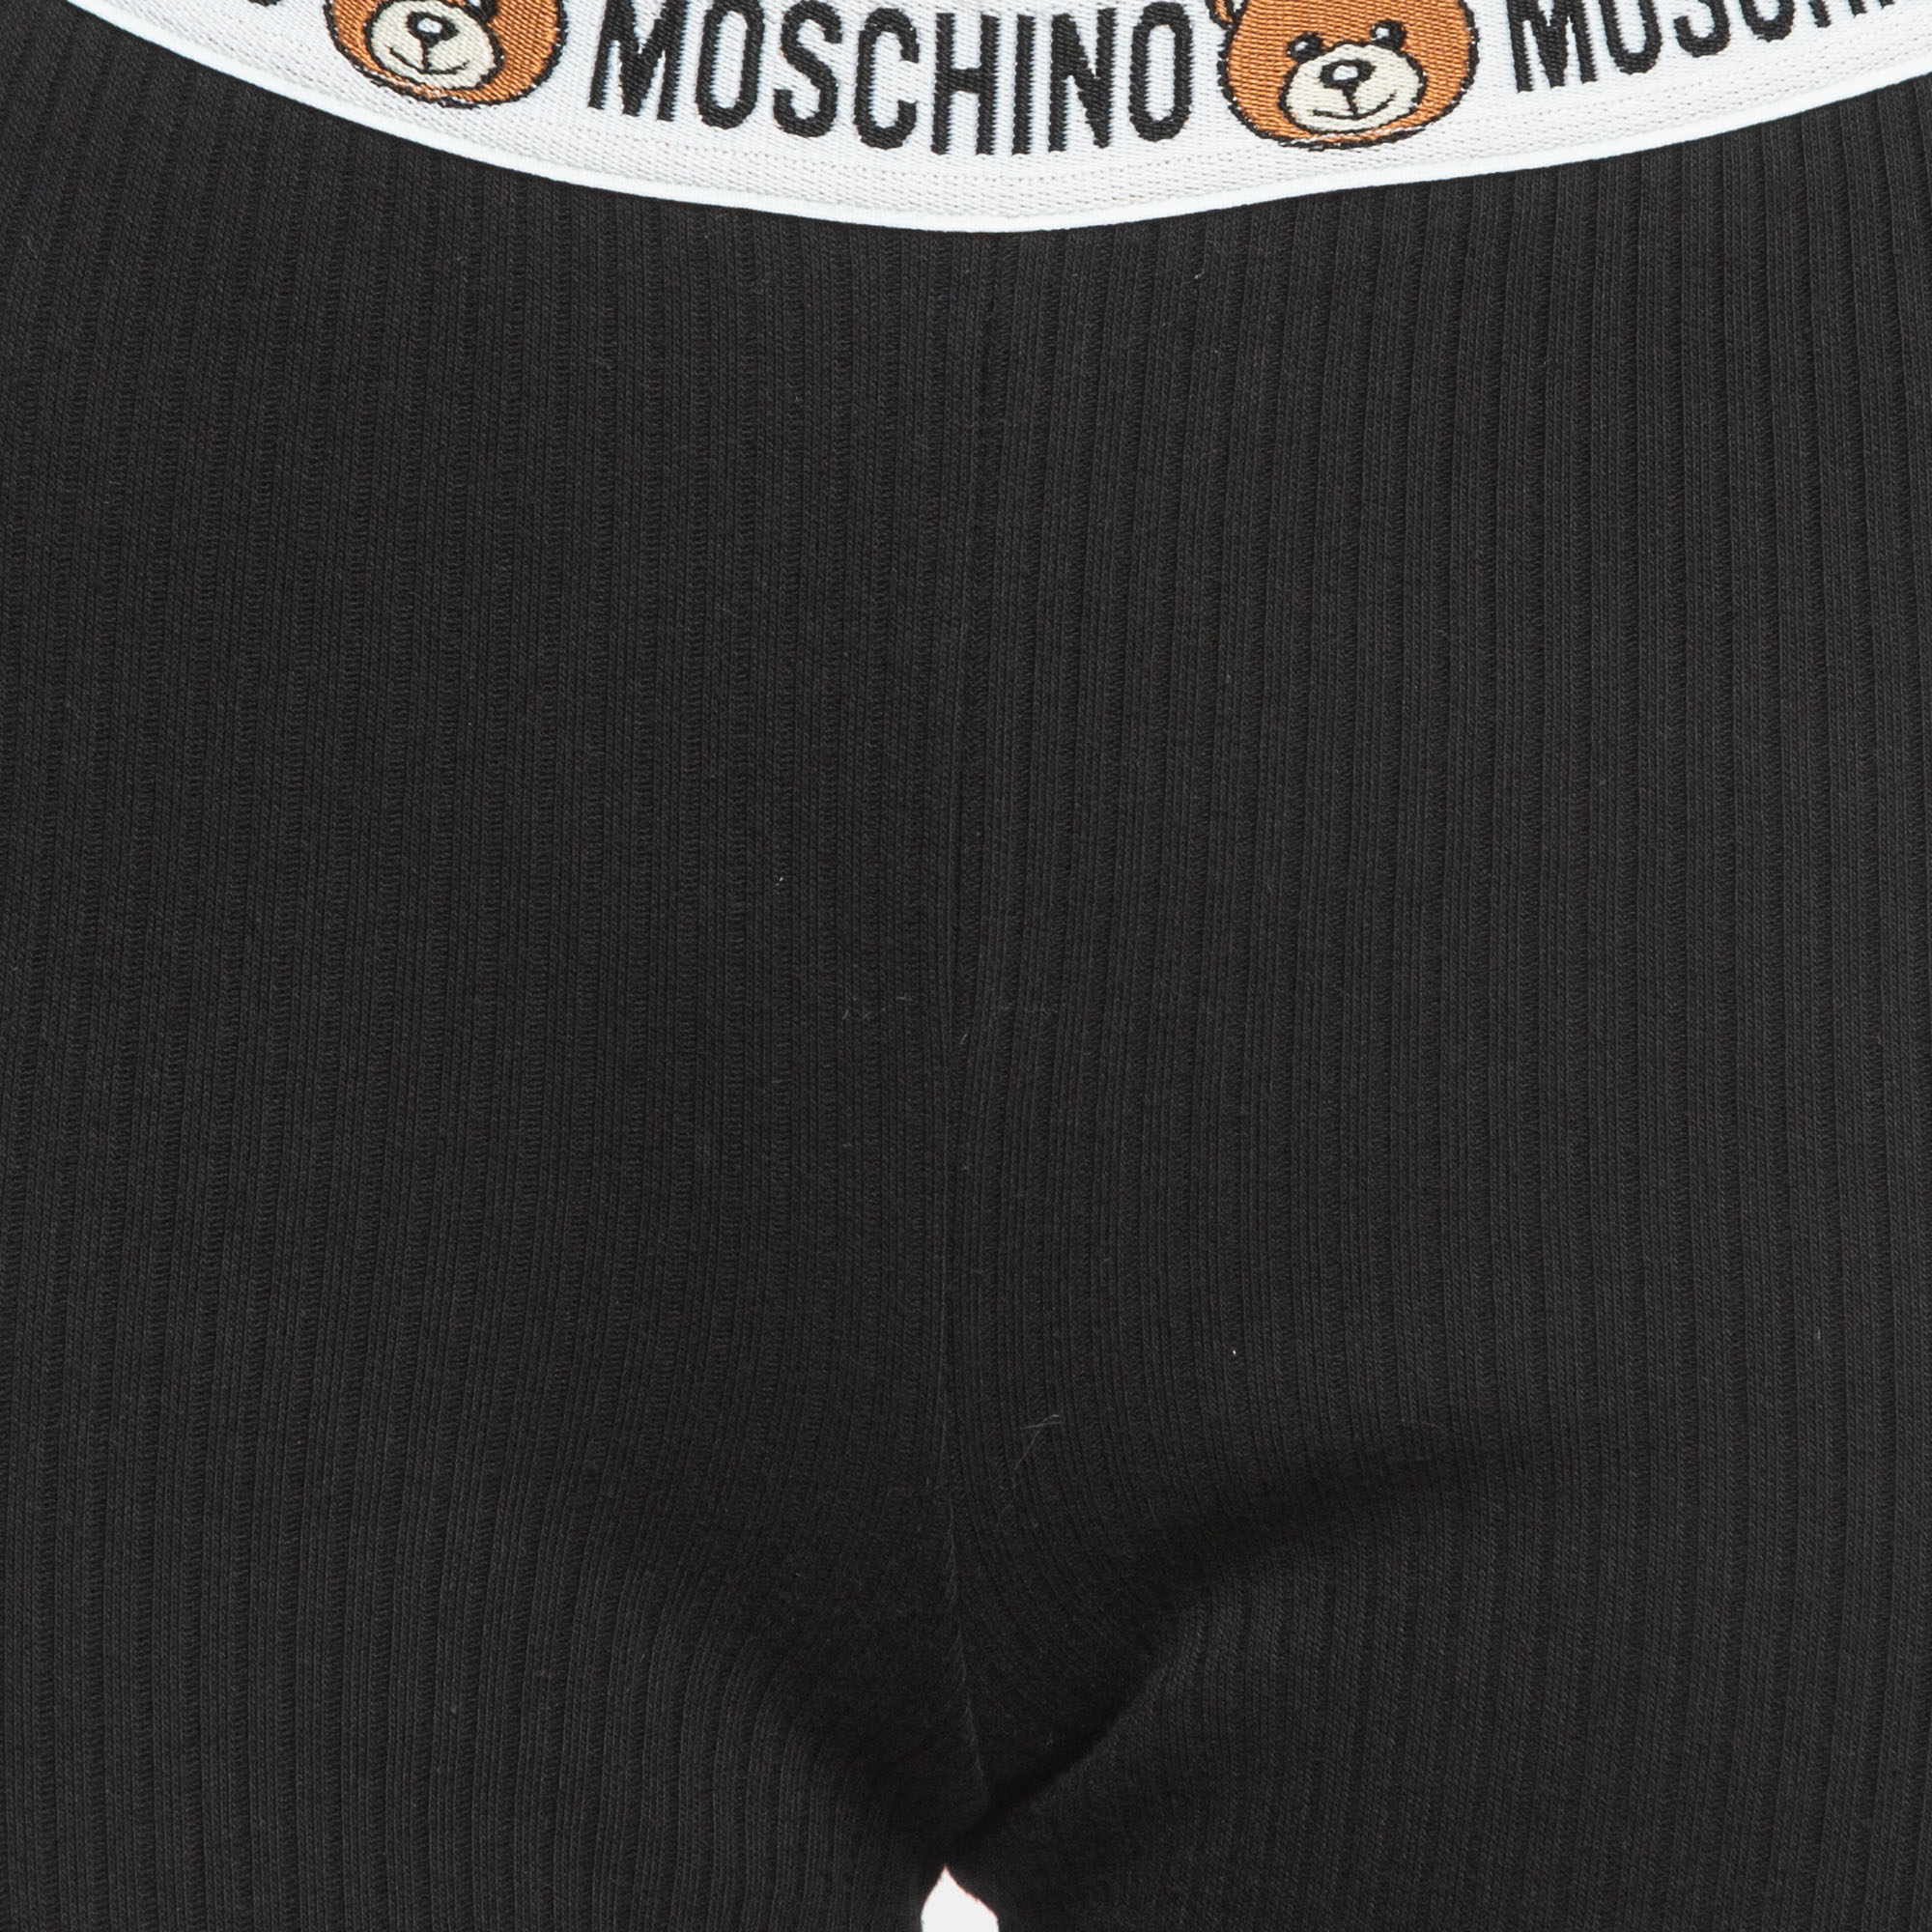 Moschino Black Cotton Knit Waist Band Detail Leggings L